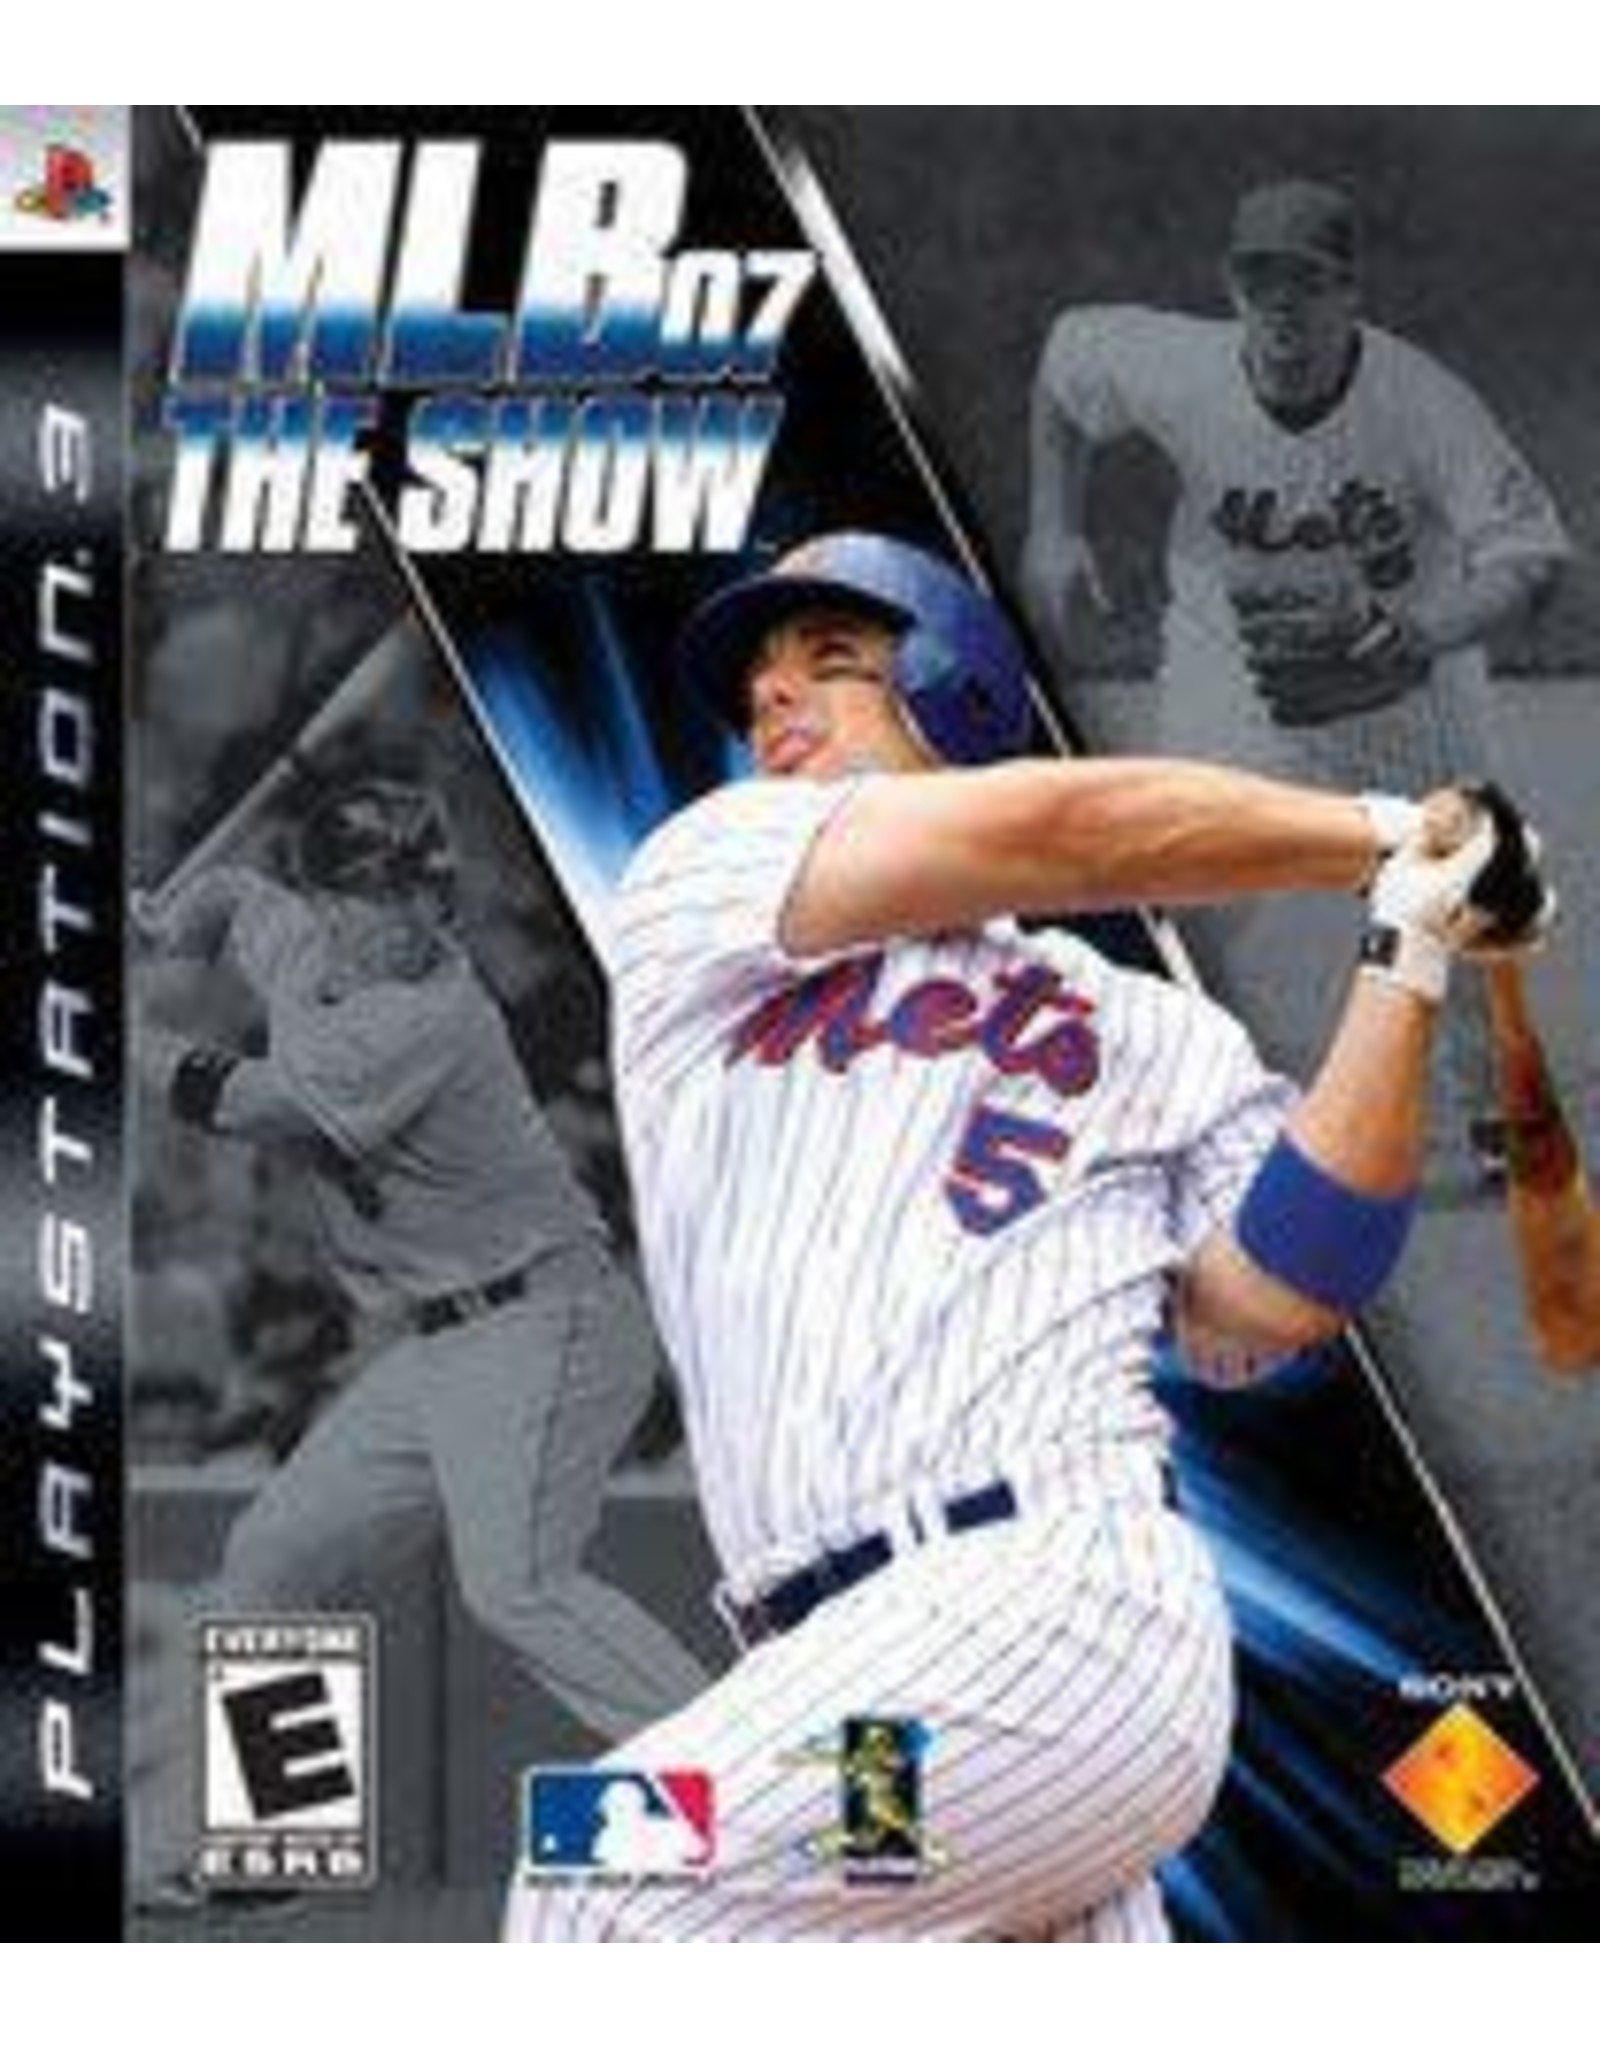 Playstation 3 MLB 07 The Show (CiB)